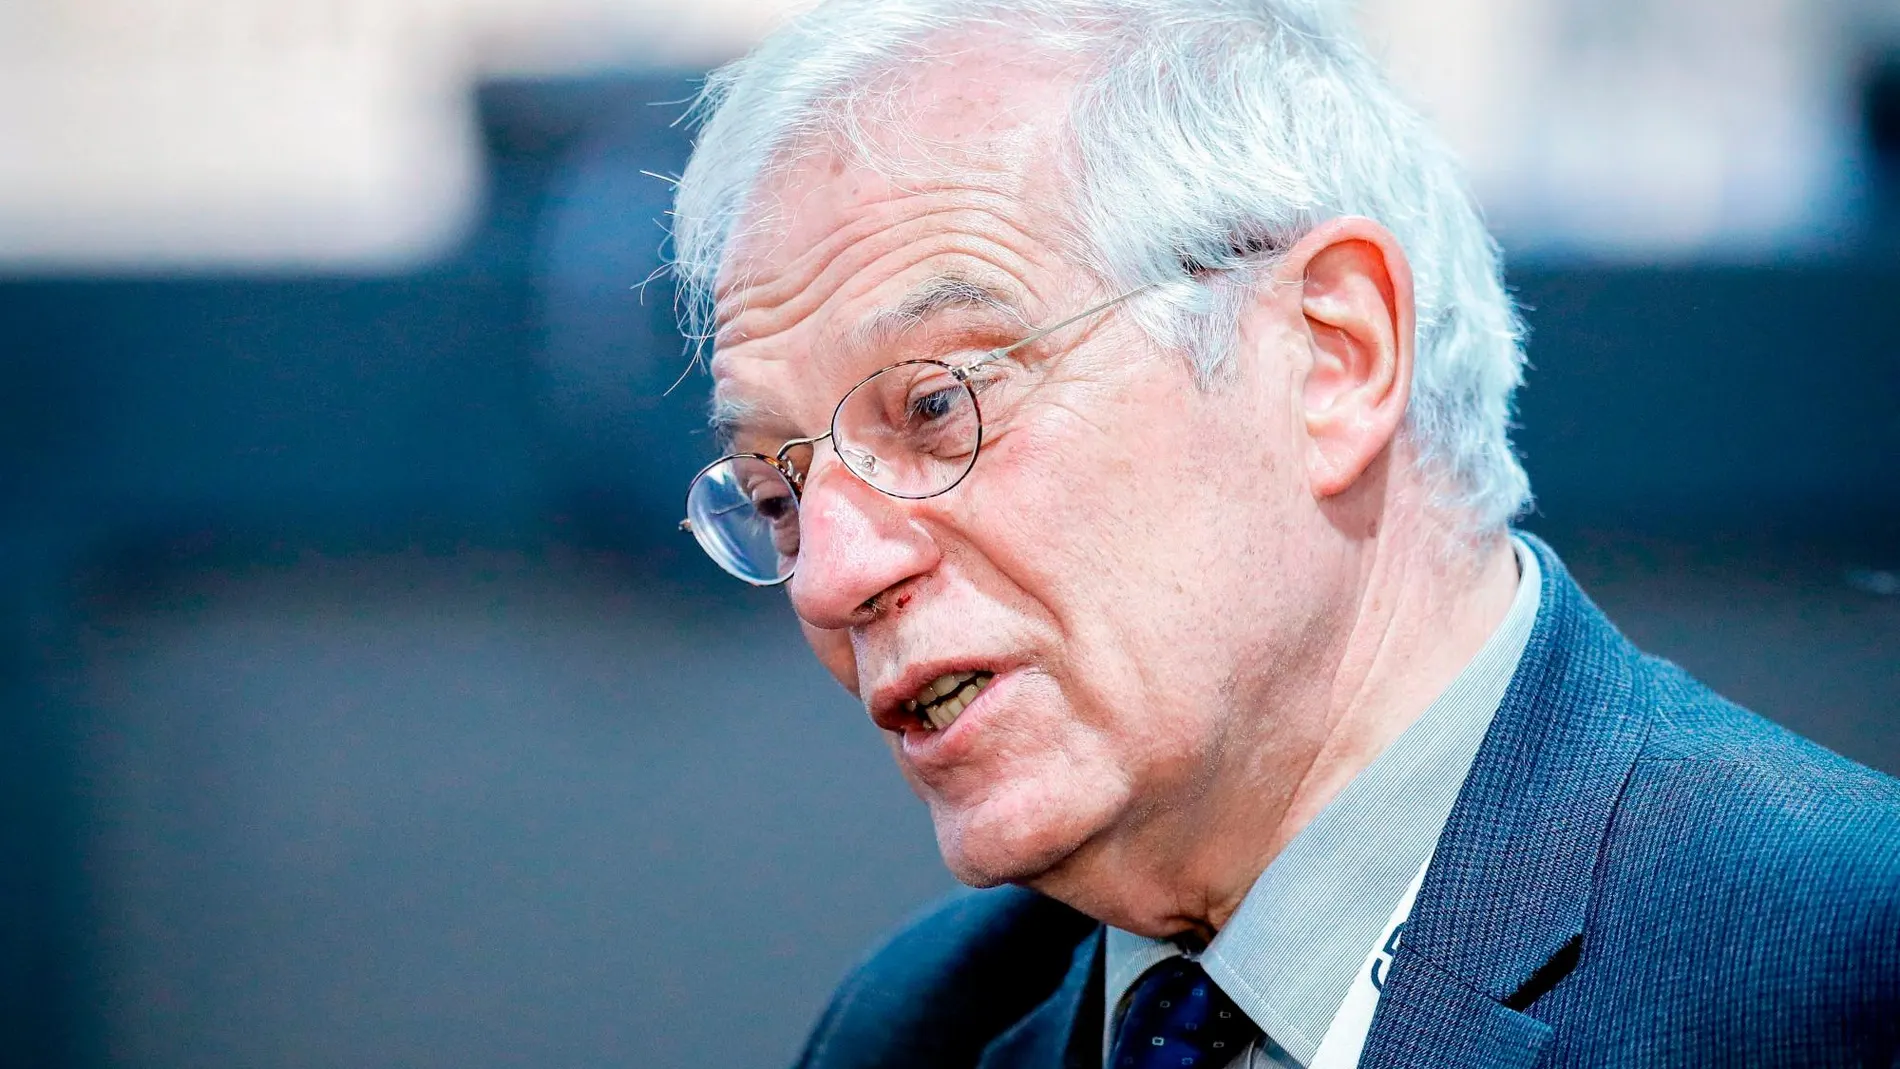 El ministro de Asuntos Exteriores, Josep Borrell / Foto: Efe